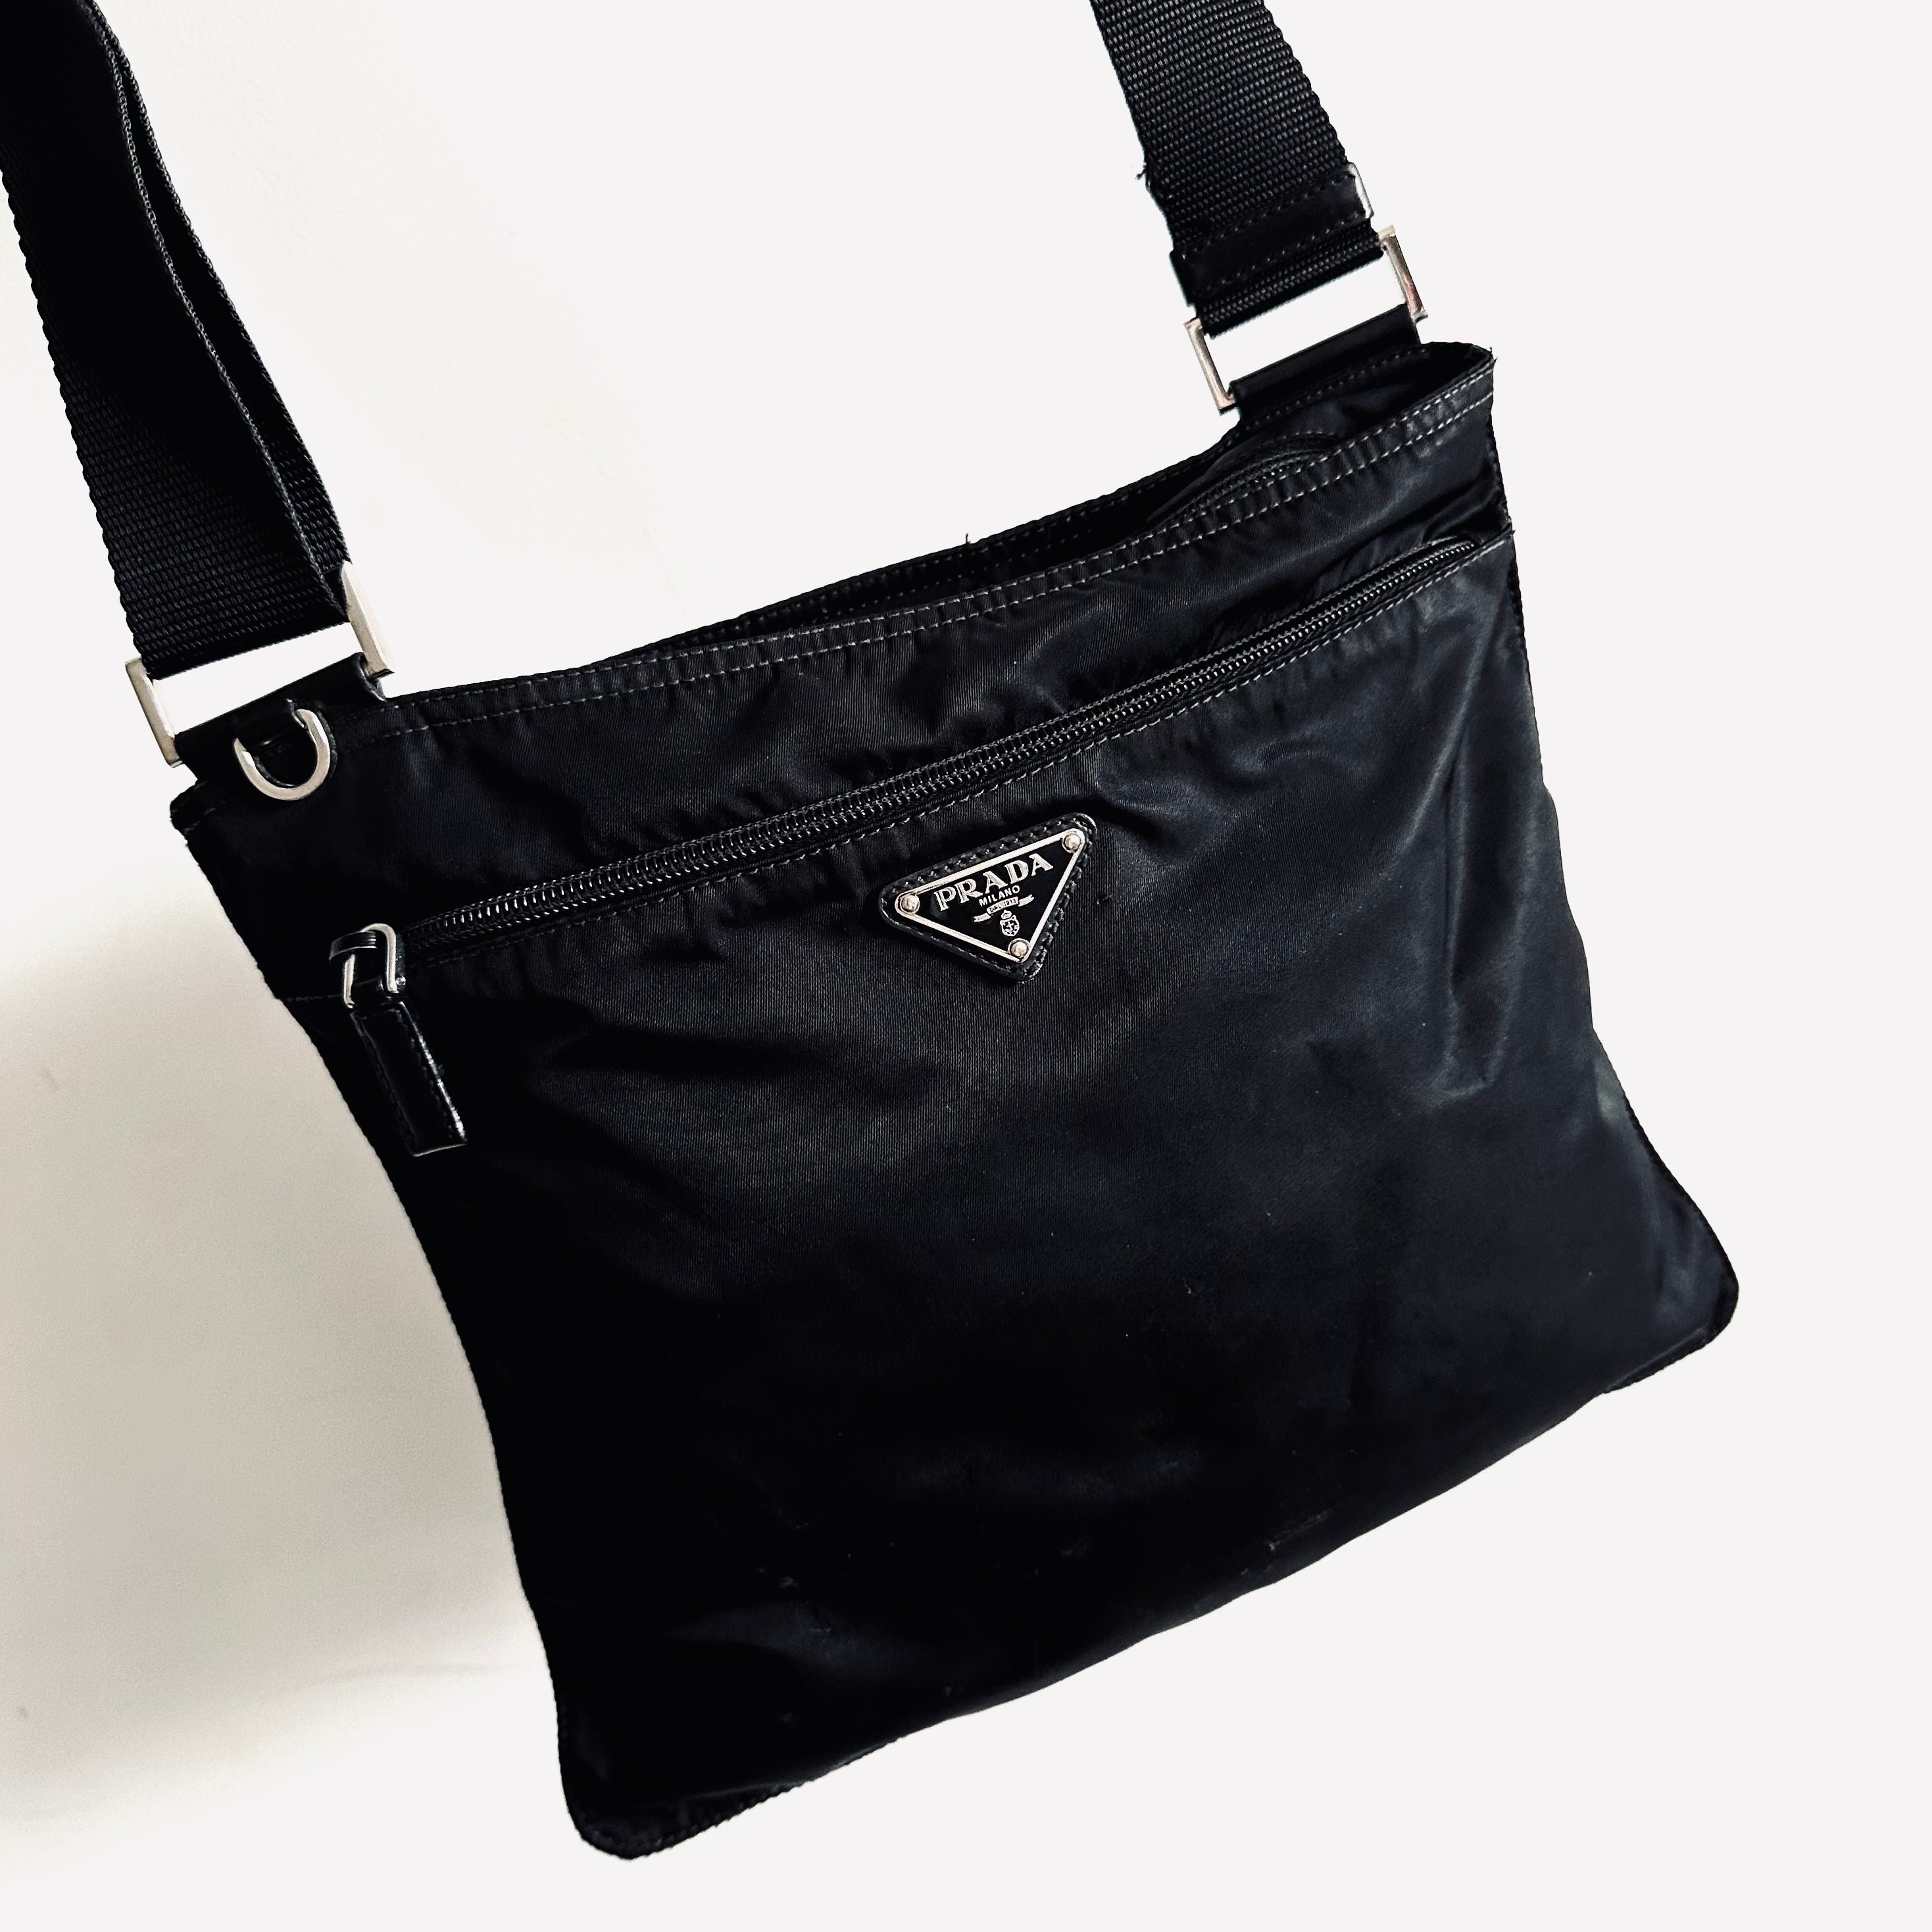 Prada Sling Shoulder Bag Nylon Black For Men | Watches Prime